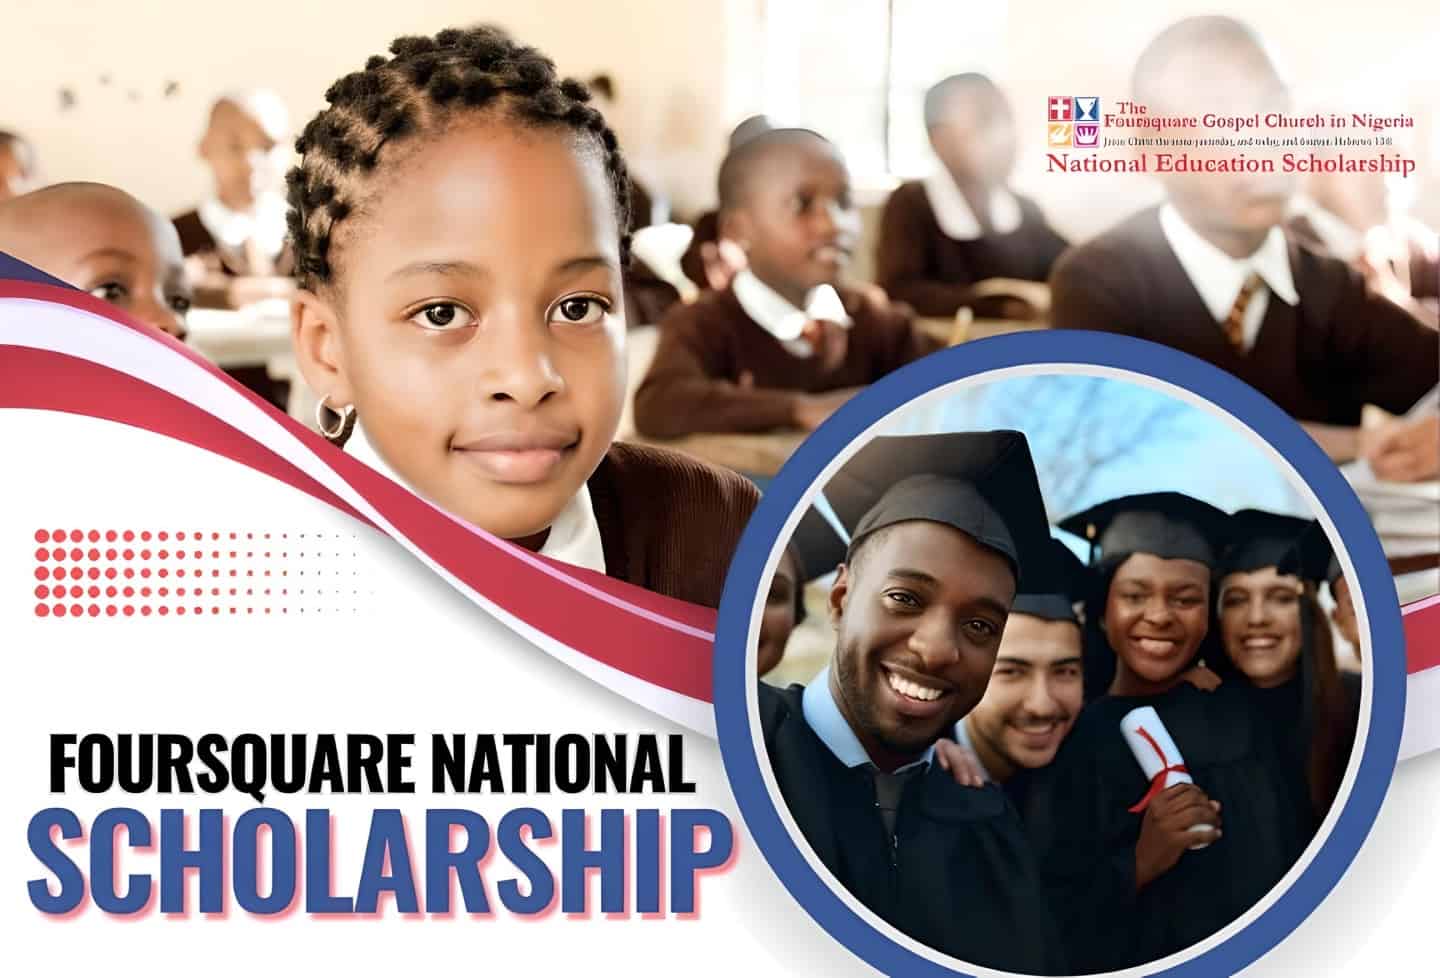 Foursquare National Scholarship Award